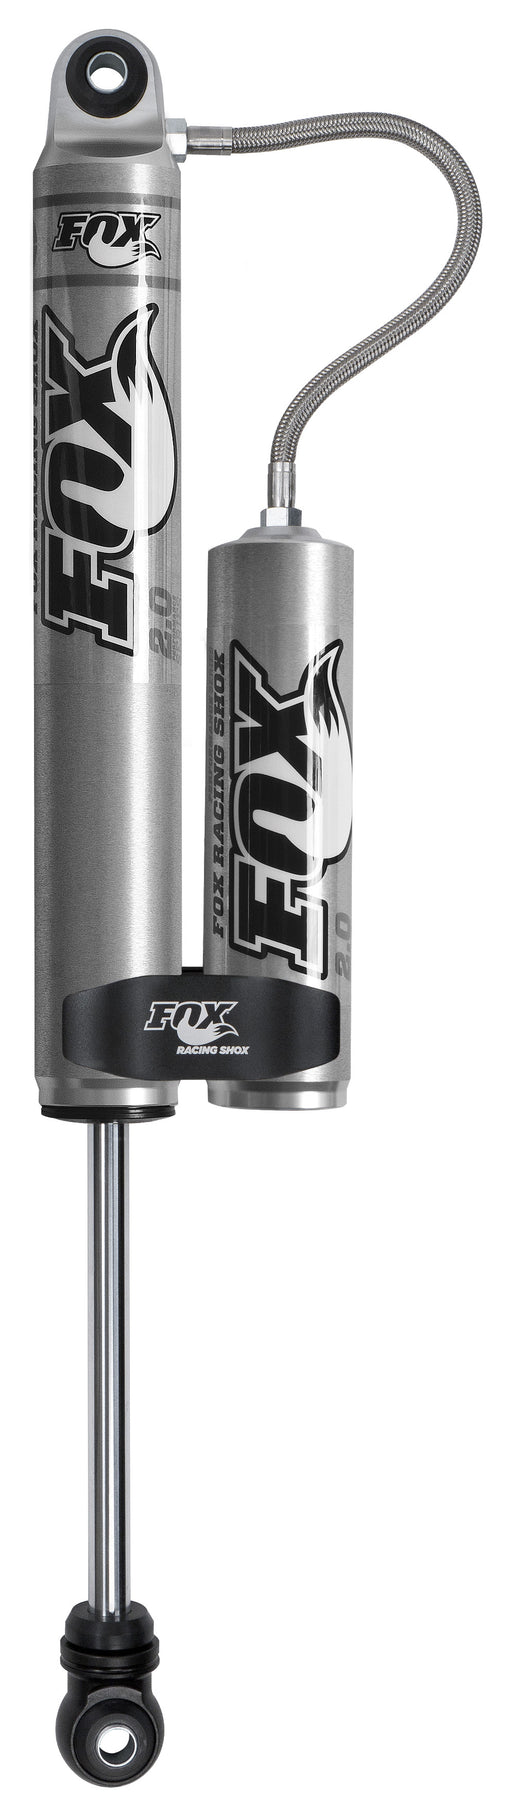 Fox Racing Shox 985-24-015 Performance Series Shock Absorber